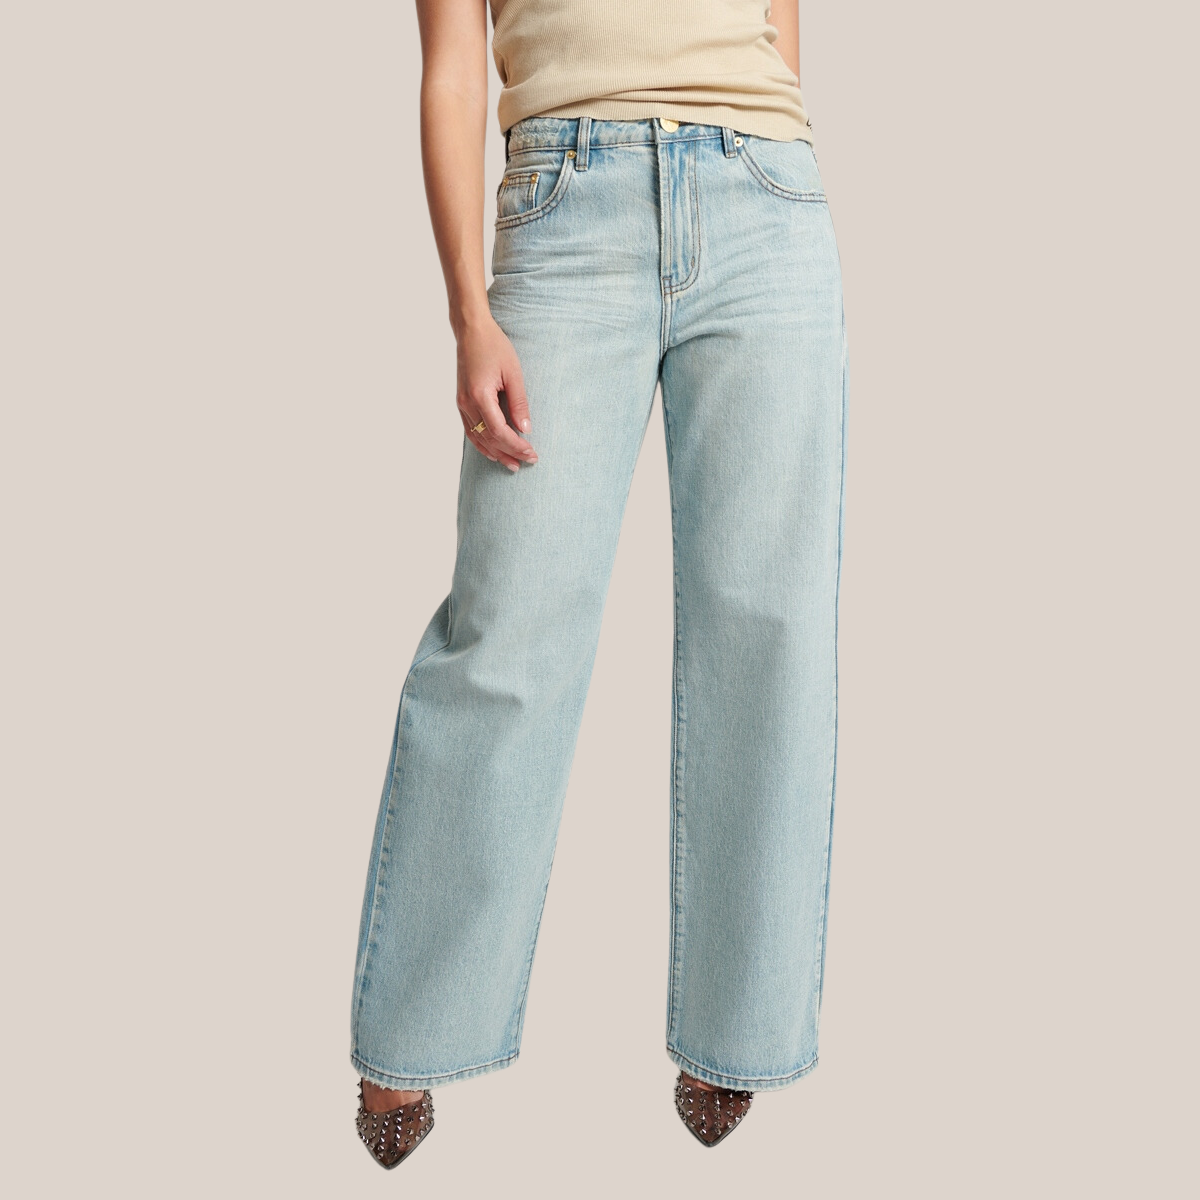 Gotstyle Fashion - One Teaspoon Denim 90s Vibe Mid Waist Wide Leg Flare Jeans - Light Blue